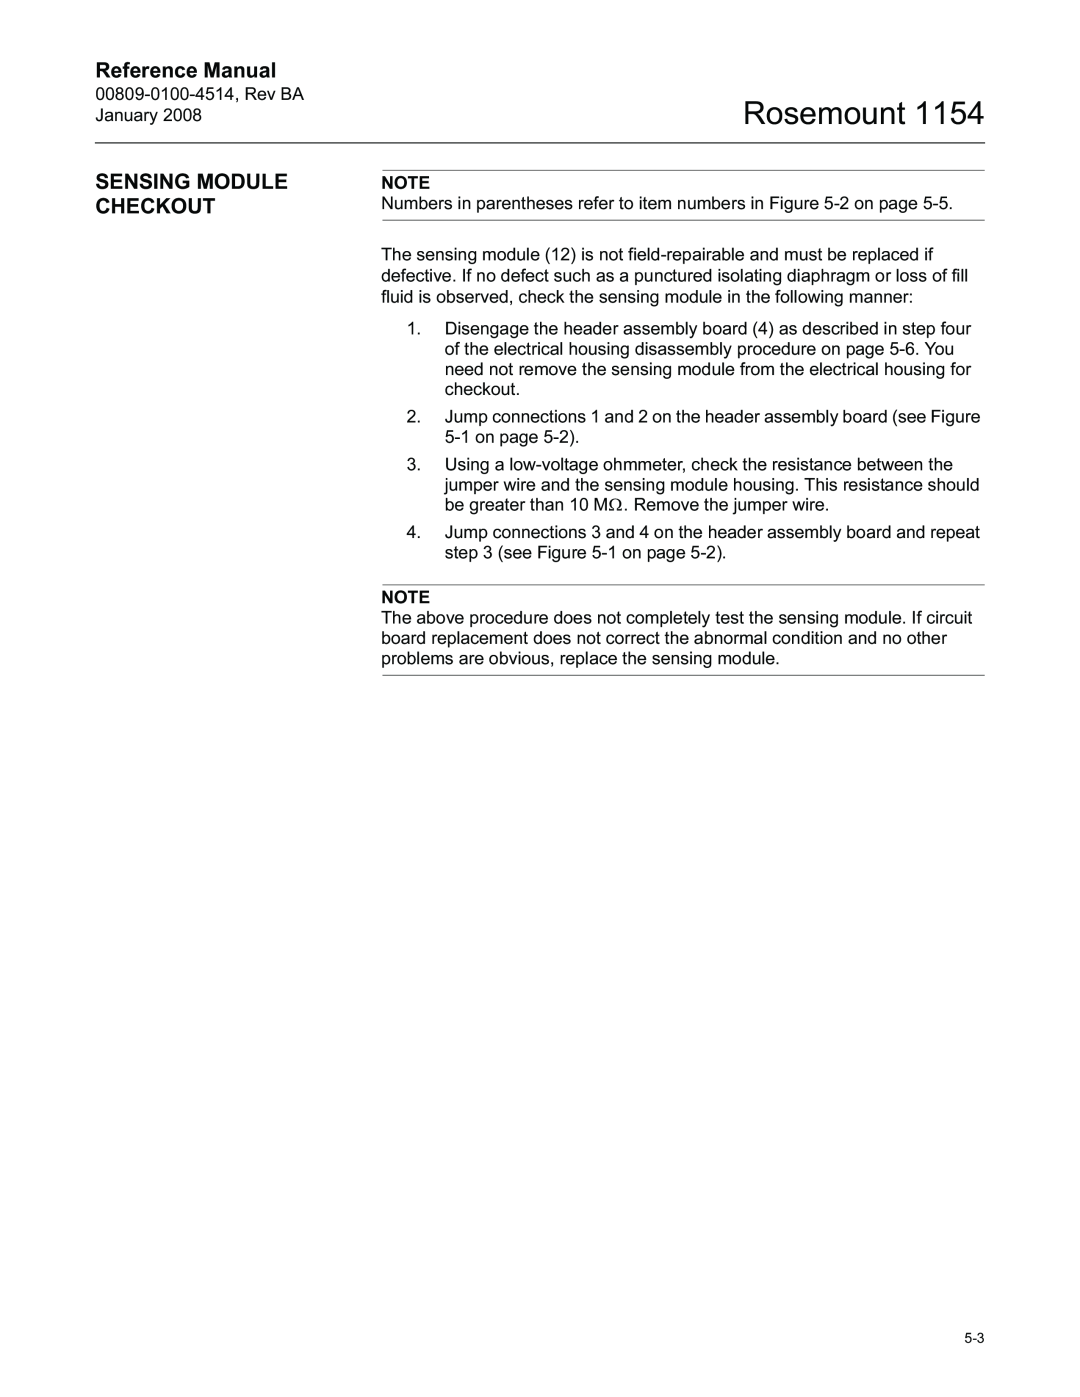 Emerson 1154, 00809-0100-4514 manual Sensing Module Checkout, Rosemount, Reference Manual 